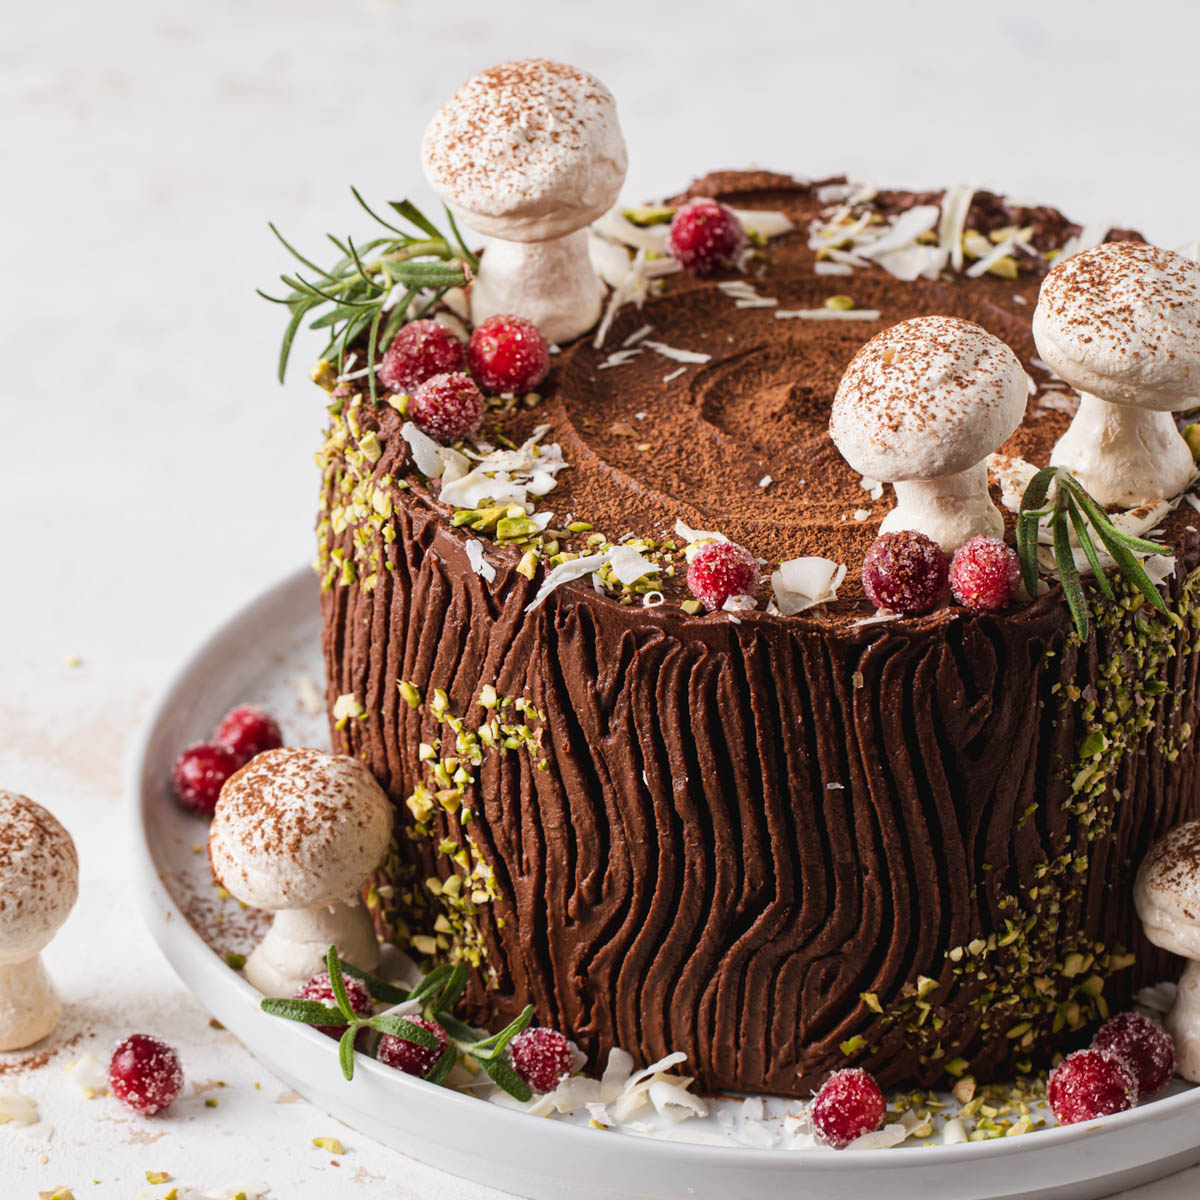 Easy Christmas Tree Cake – A Gluten Free Layered Chocolate Mint Cake